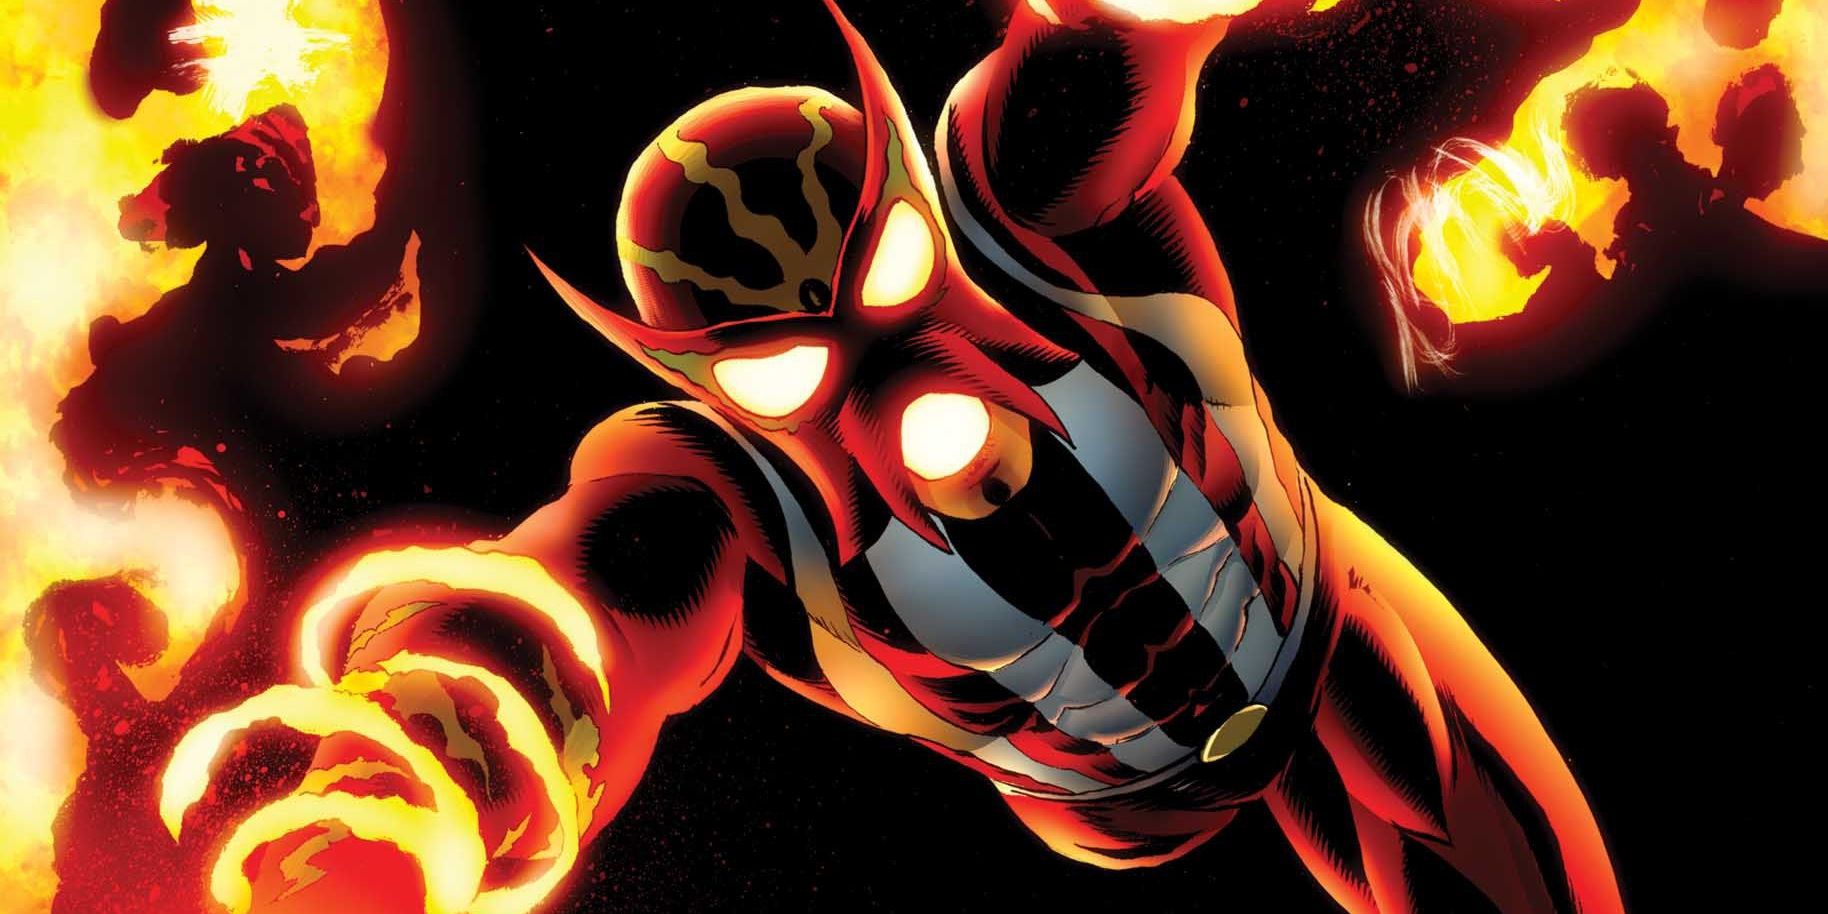 Sunfire uses his powers in X-Men comics.